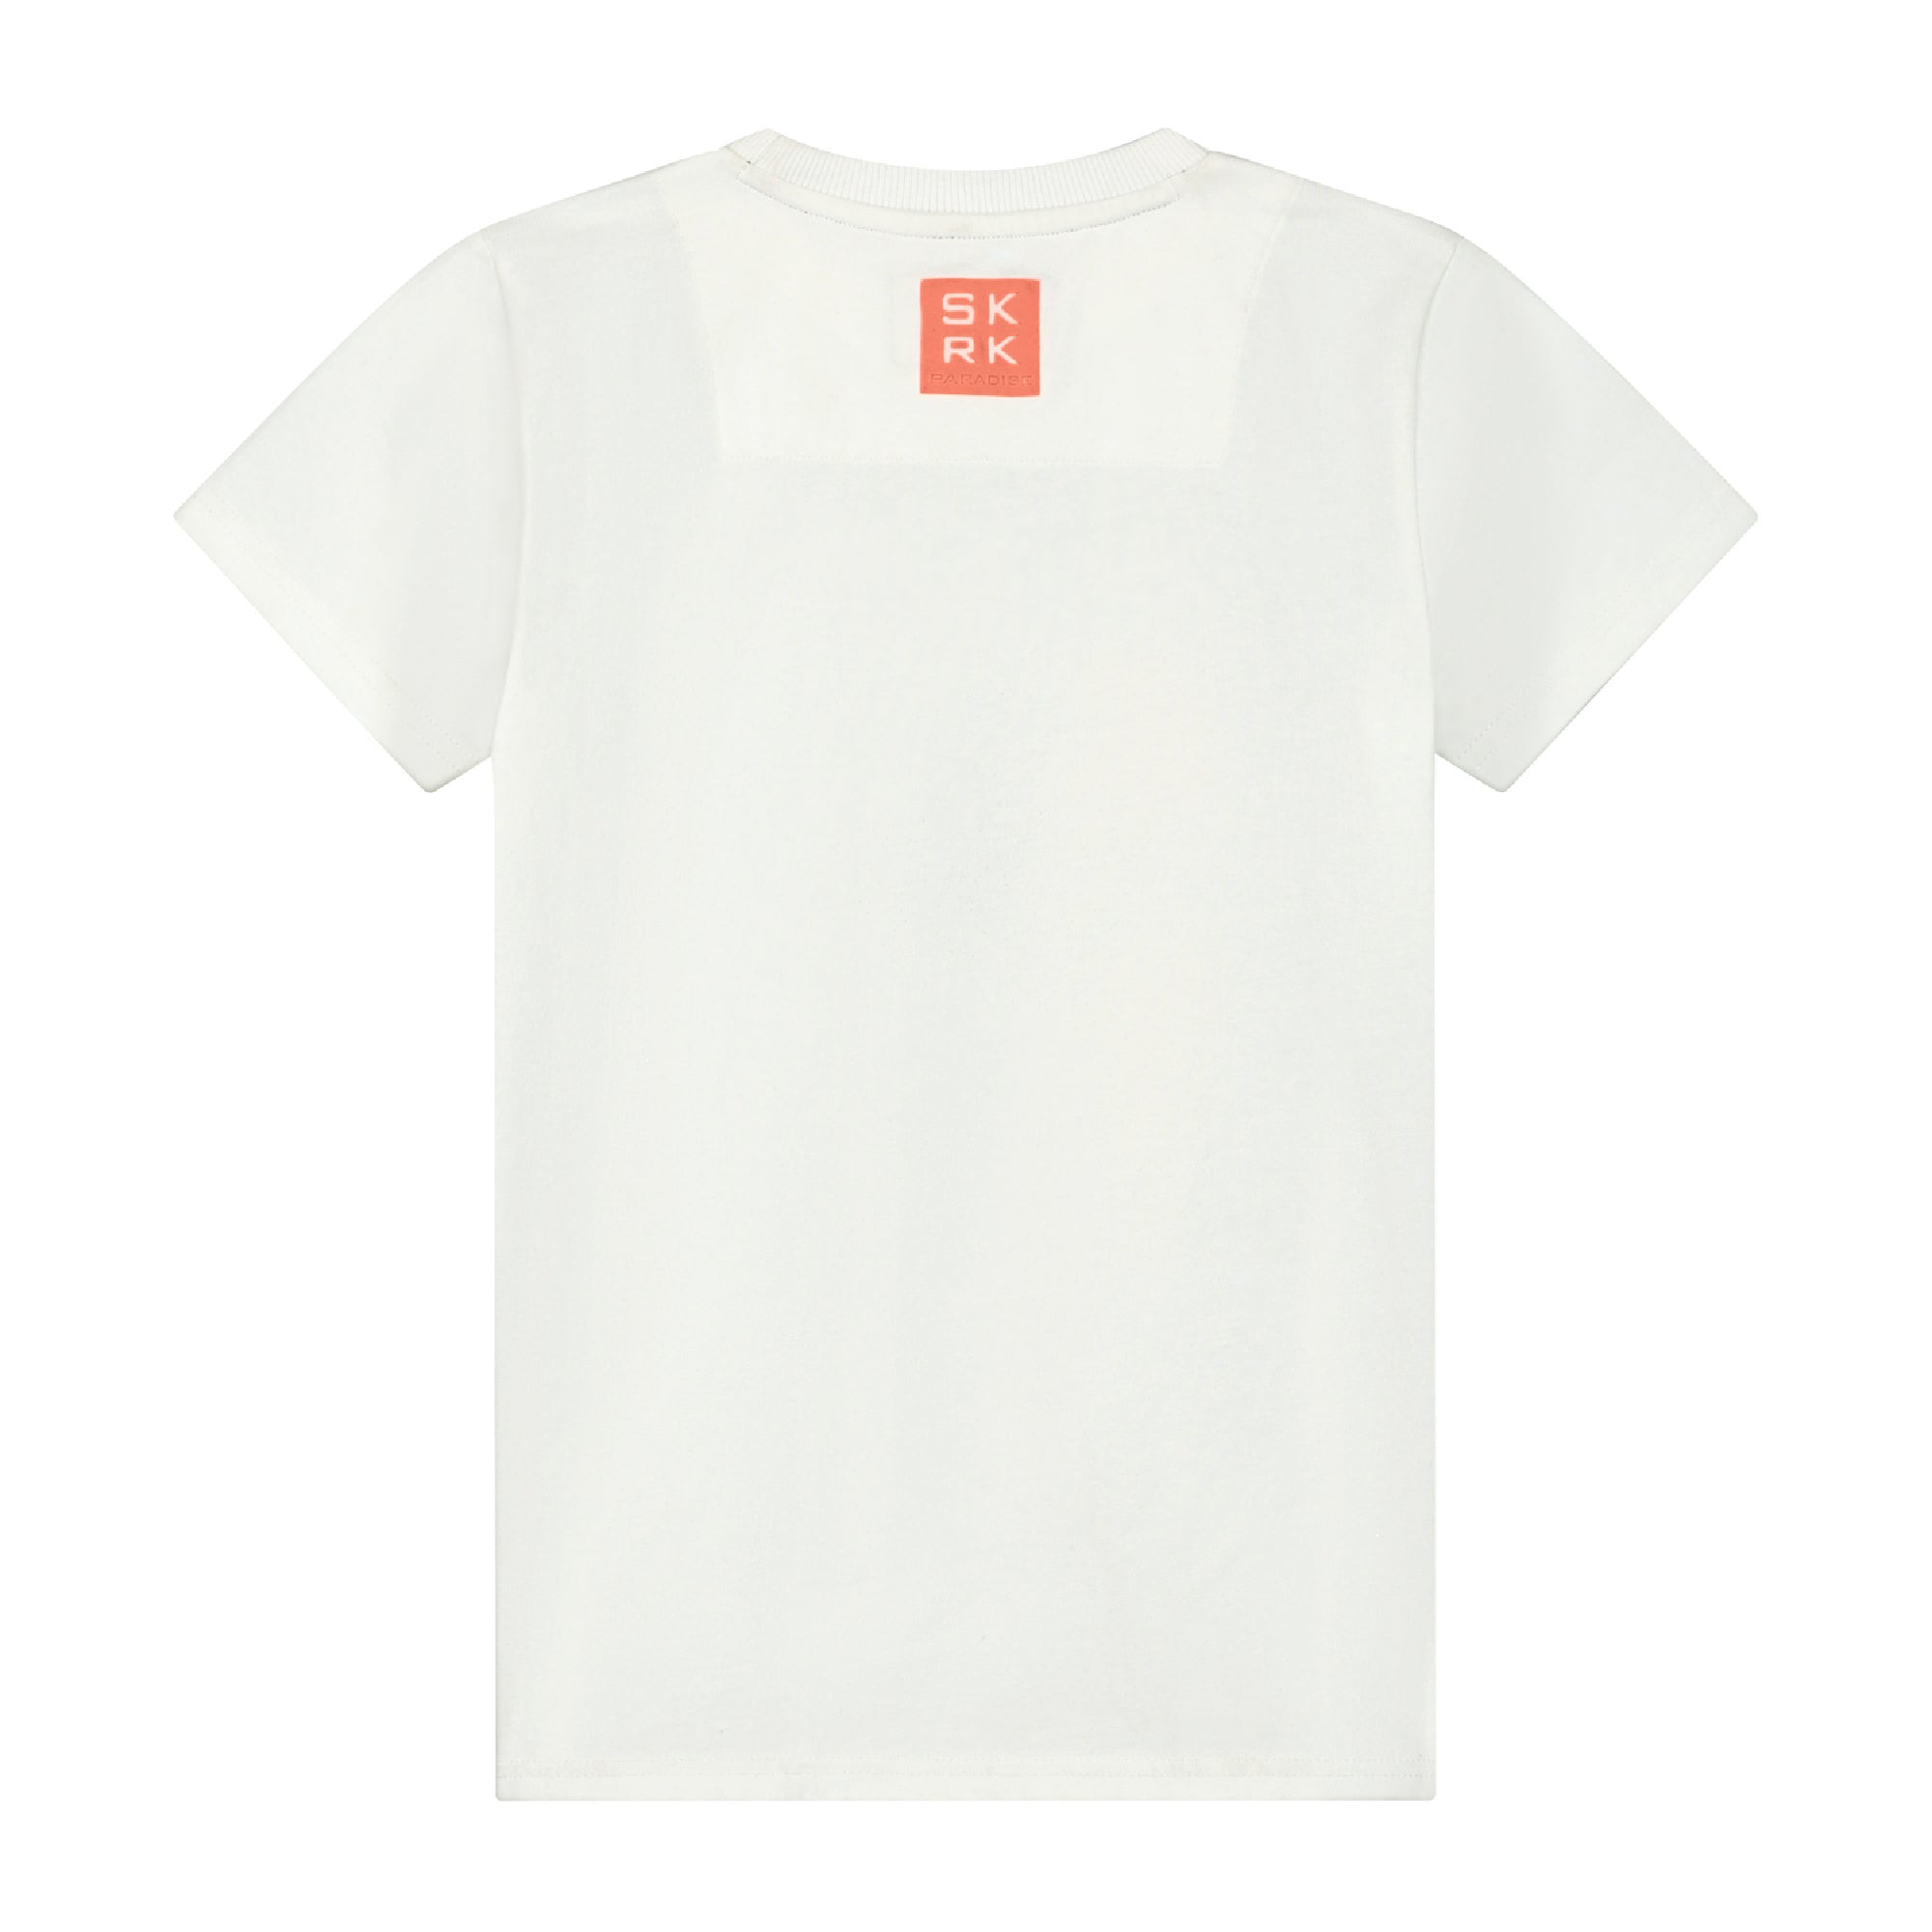 Skurk T-shirt Tip White